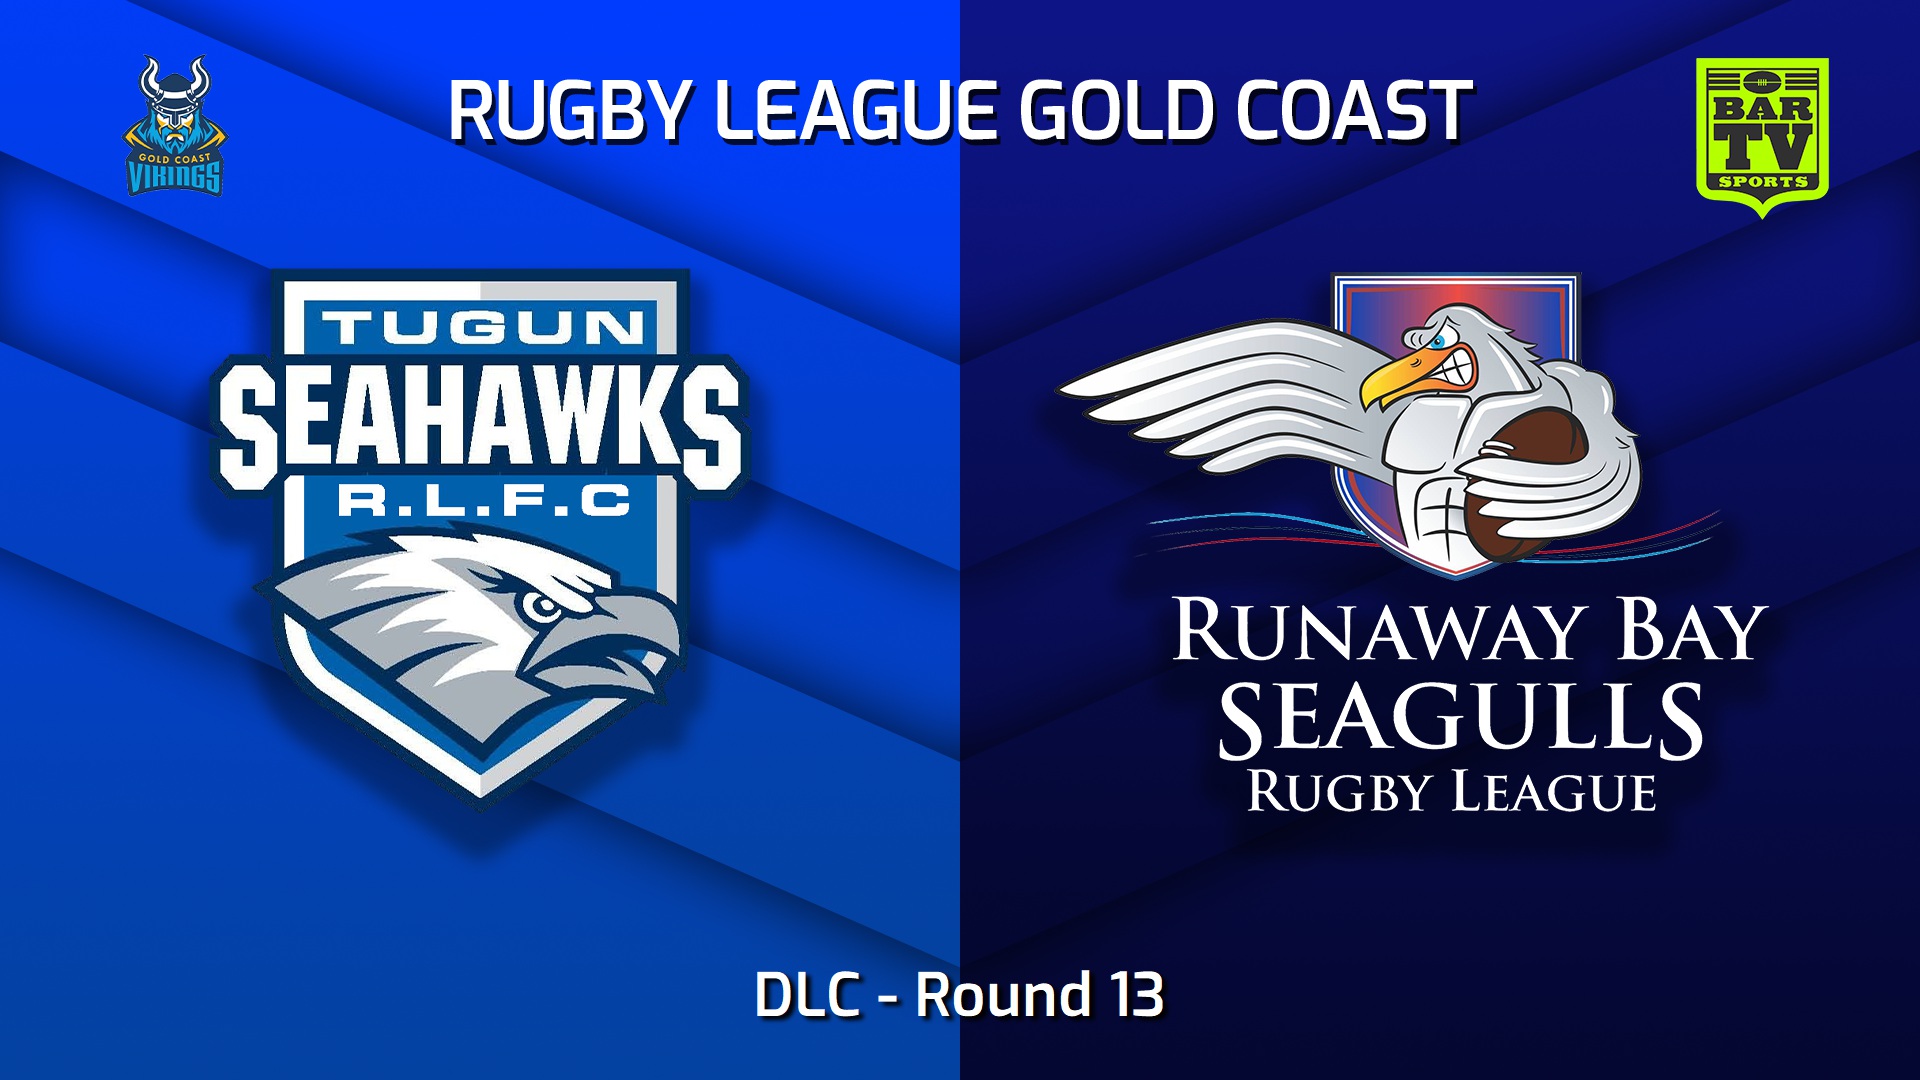 Gold Coast Round 13 DLC Tugun Seahawks v Runaway Bay Seagulls live